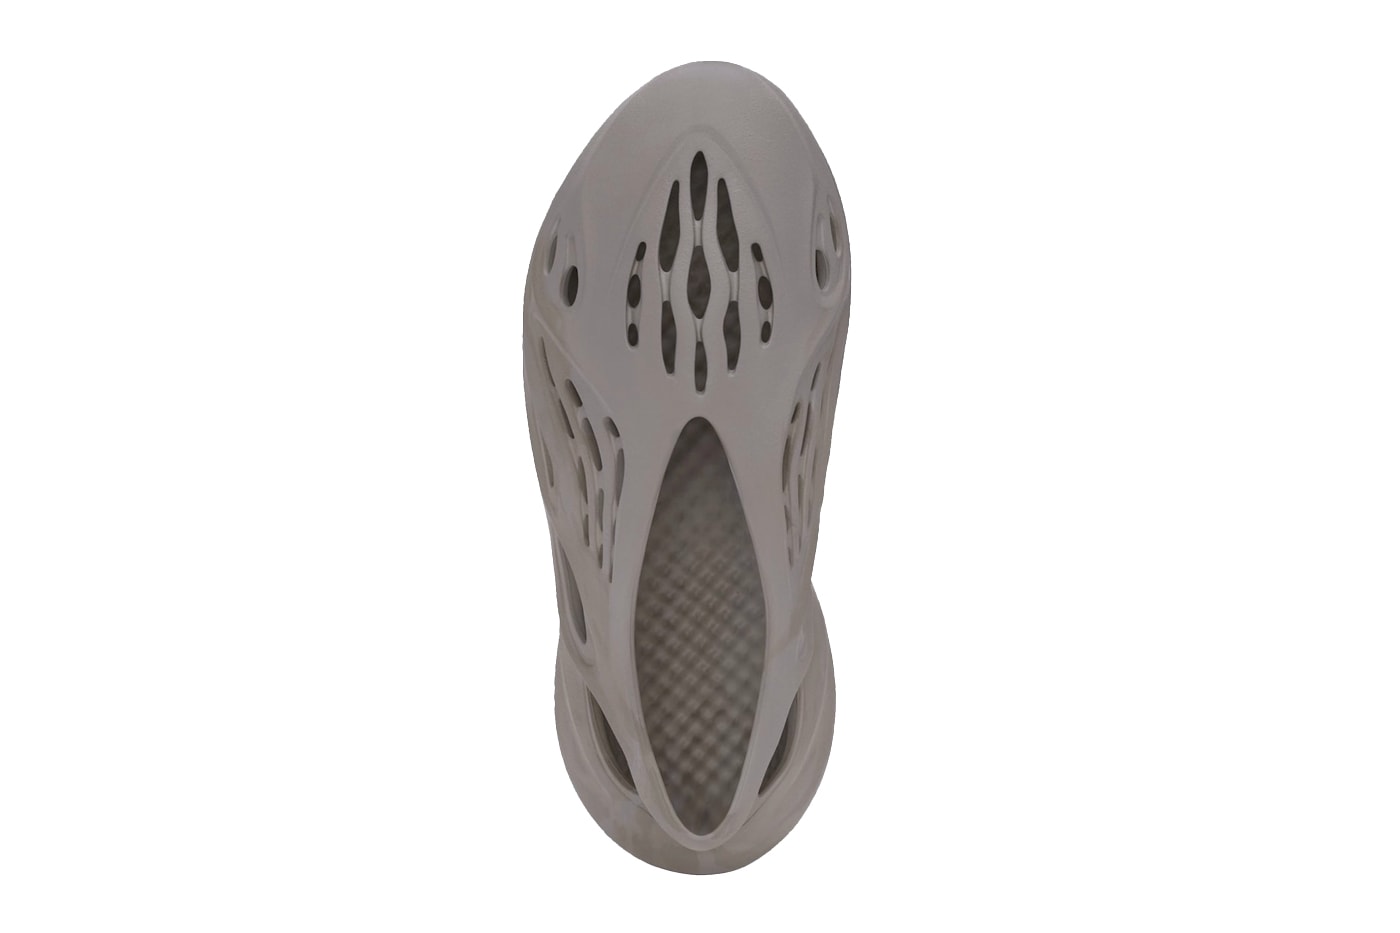 The adidas YEEZY FOAM RNNR Stone Sag Restock slip on slipper laceless date price info release